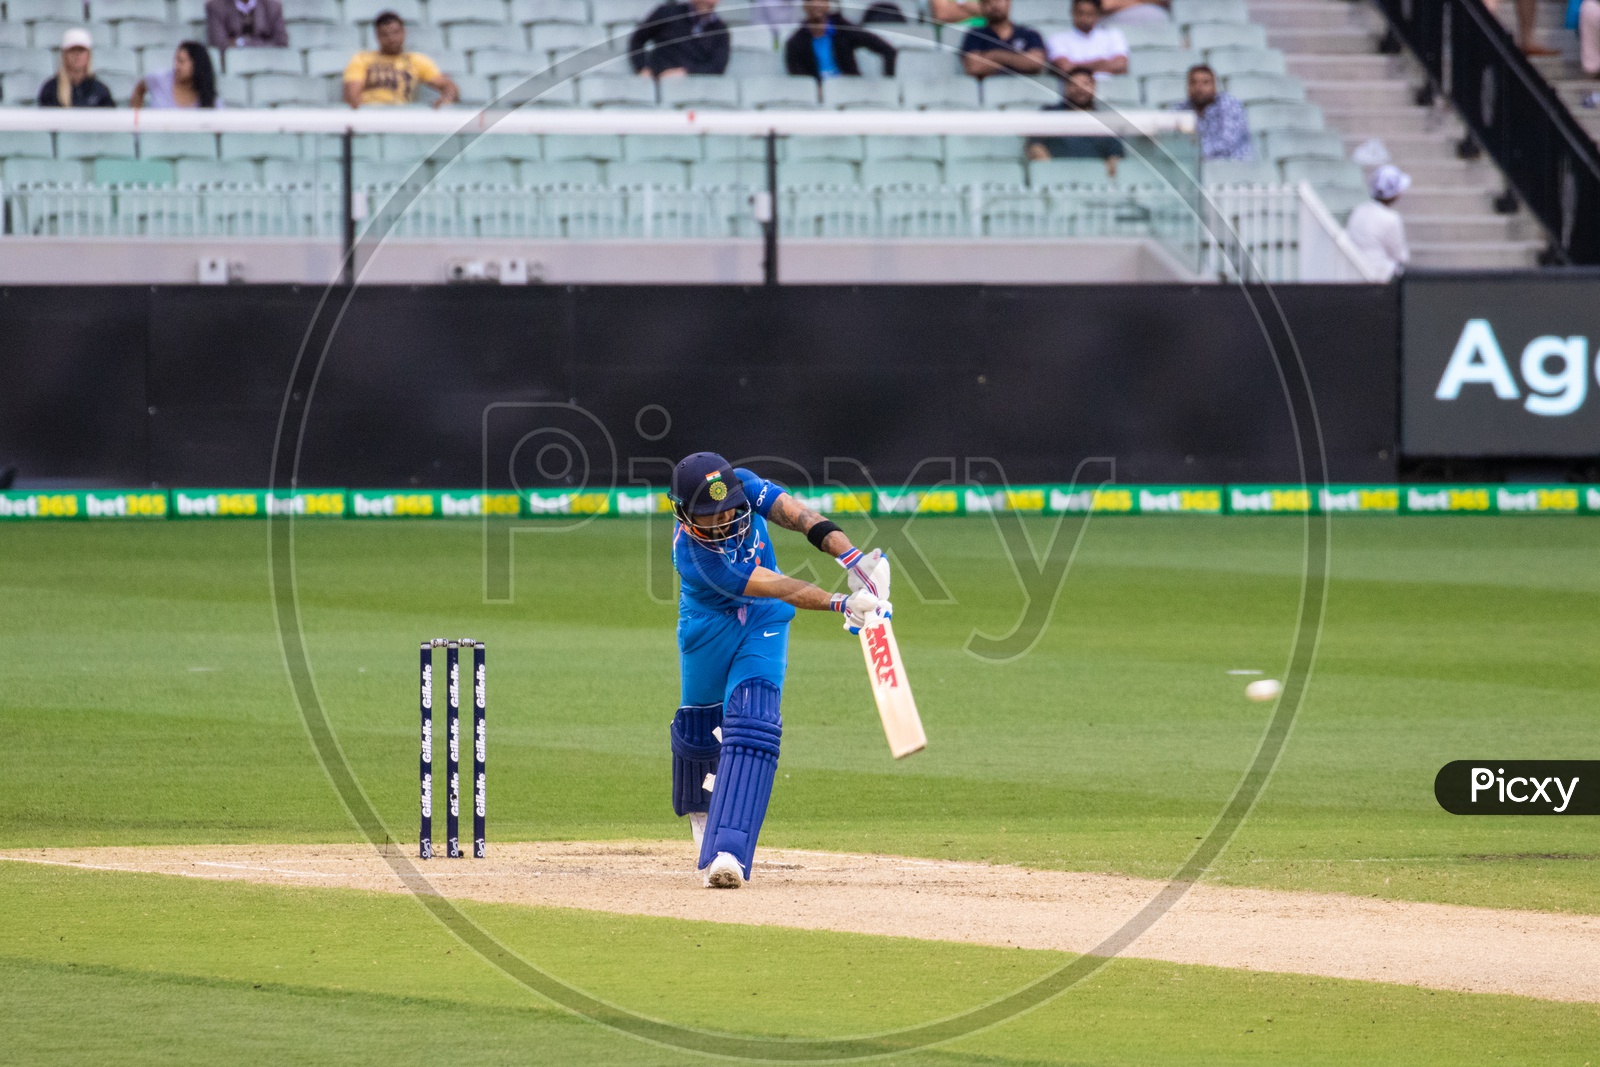 Indian Cricket Team Captain Virat Kohli Playing a Shot In a Match